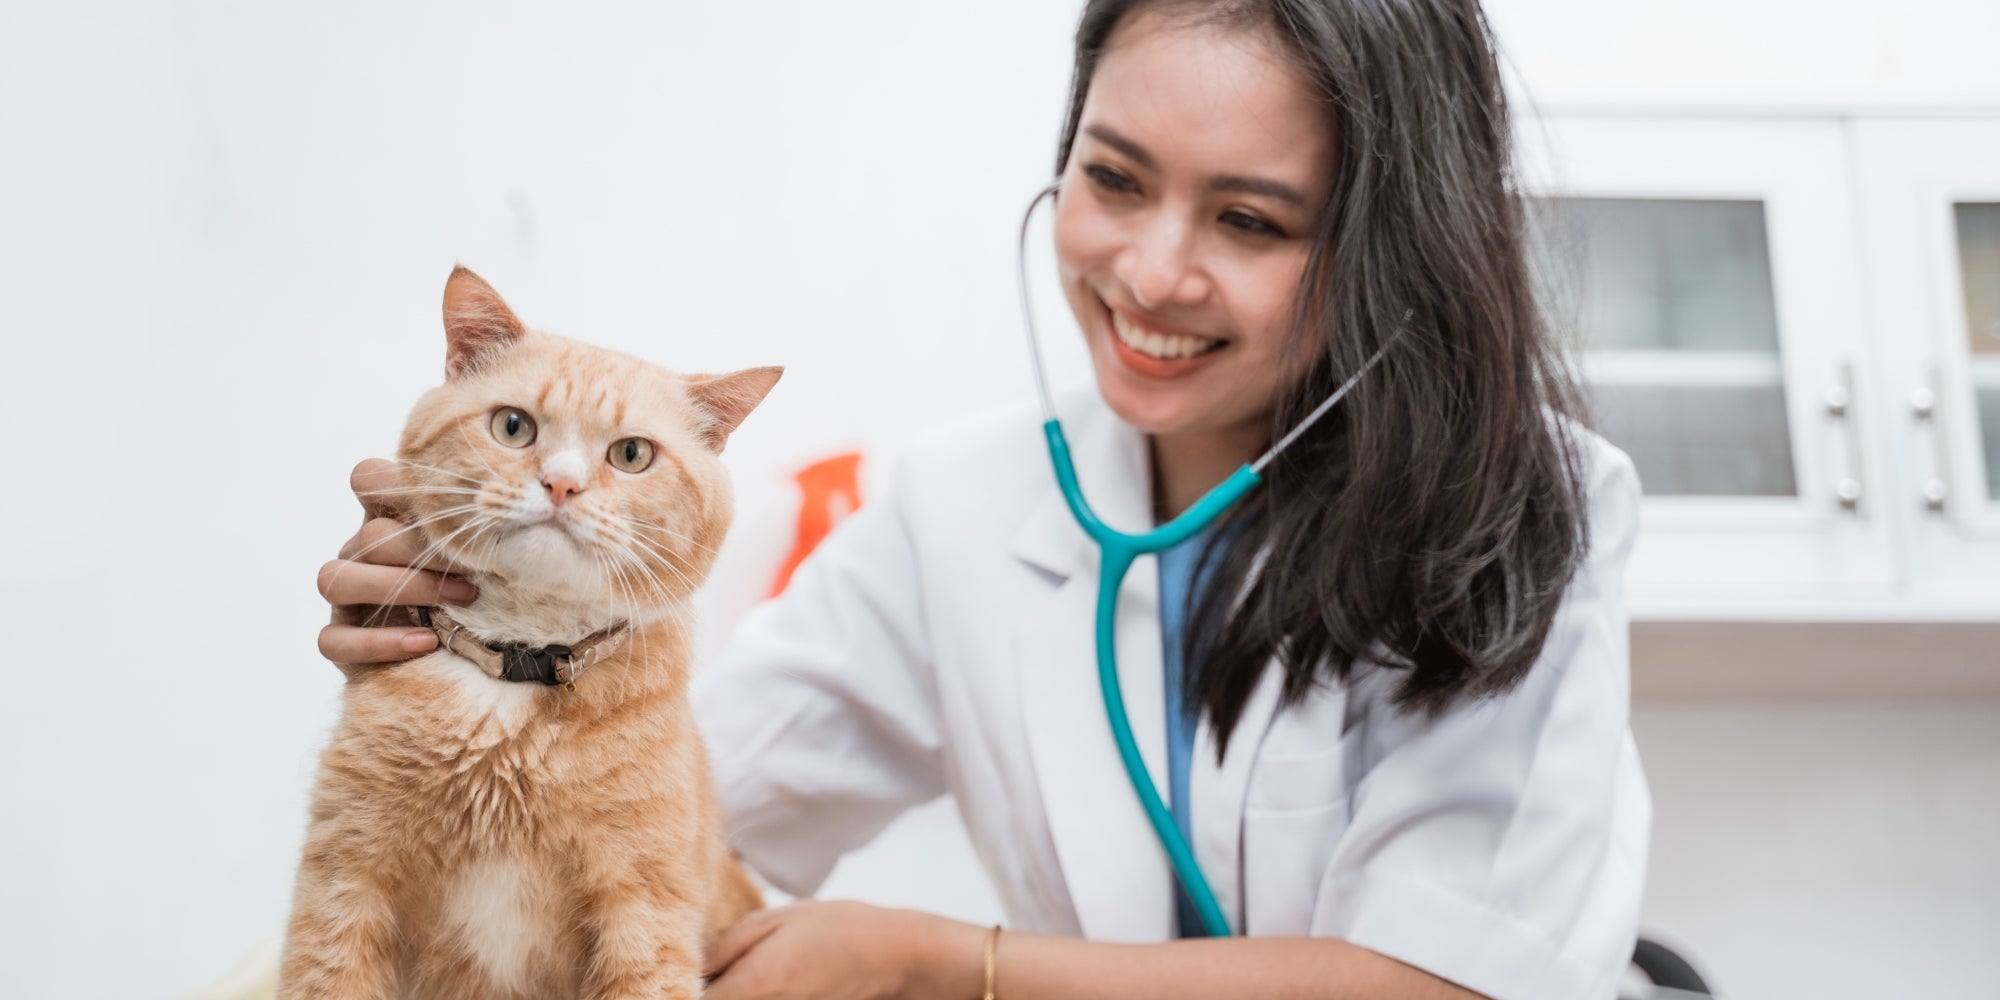 Mujer veterinaria examinando a un gato con un estetoscopio